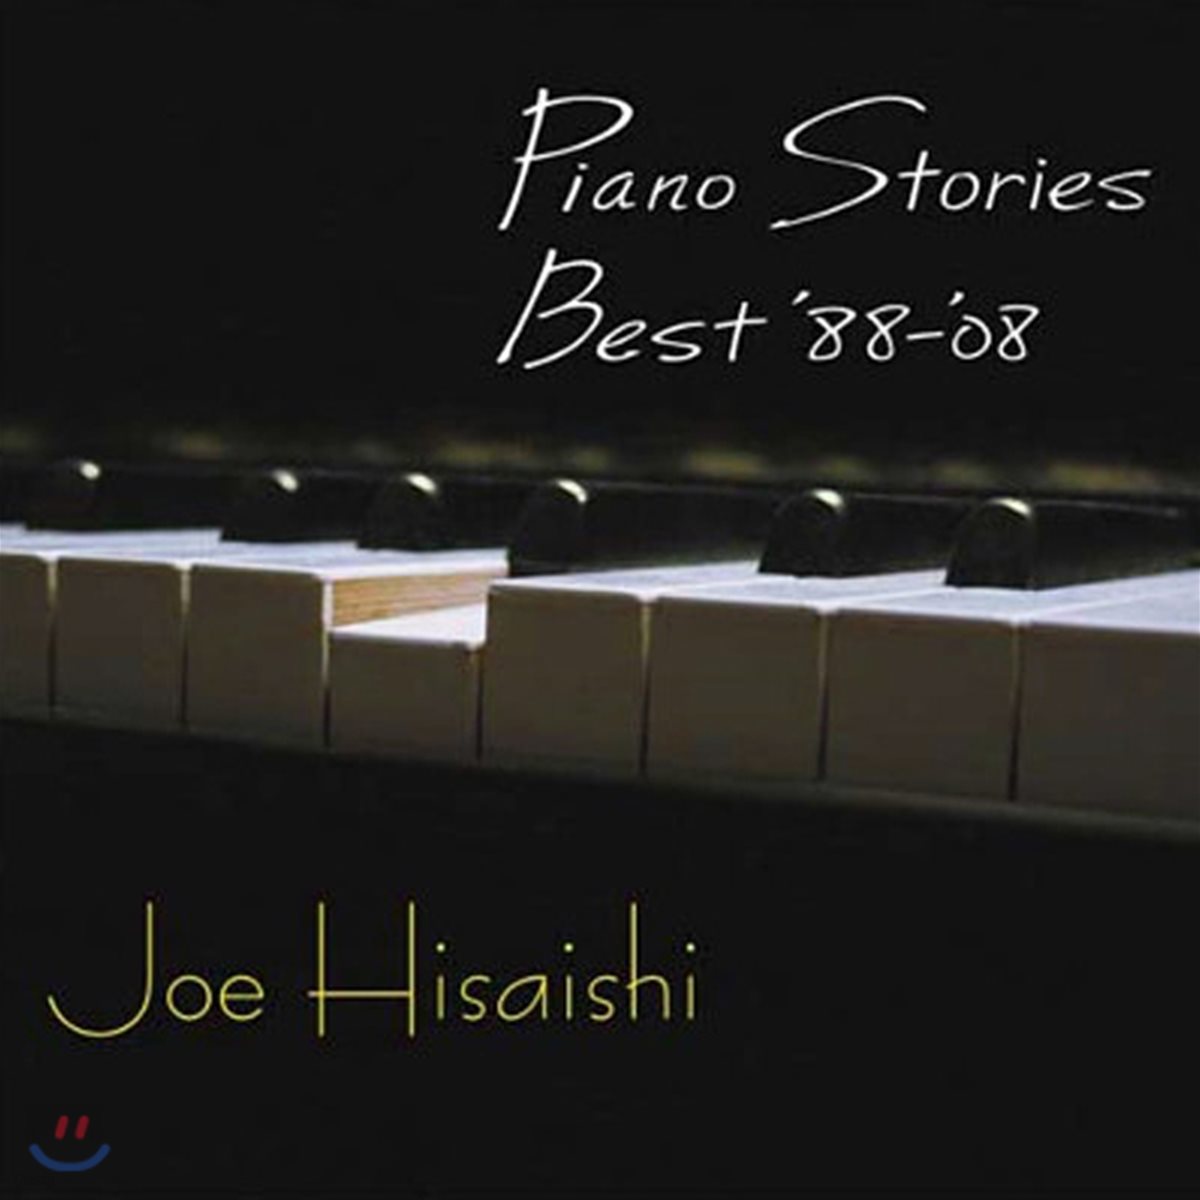 Hisaishi Joe (히사이시 조) - Piano Stories Best &#39;88-&#39;08 [2LP]